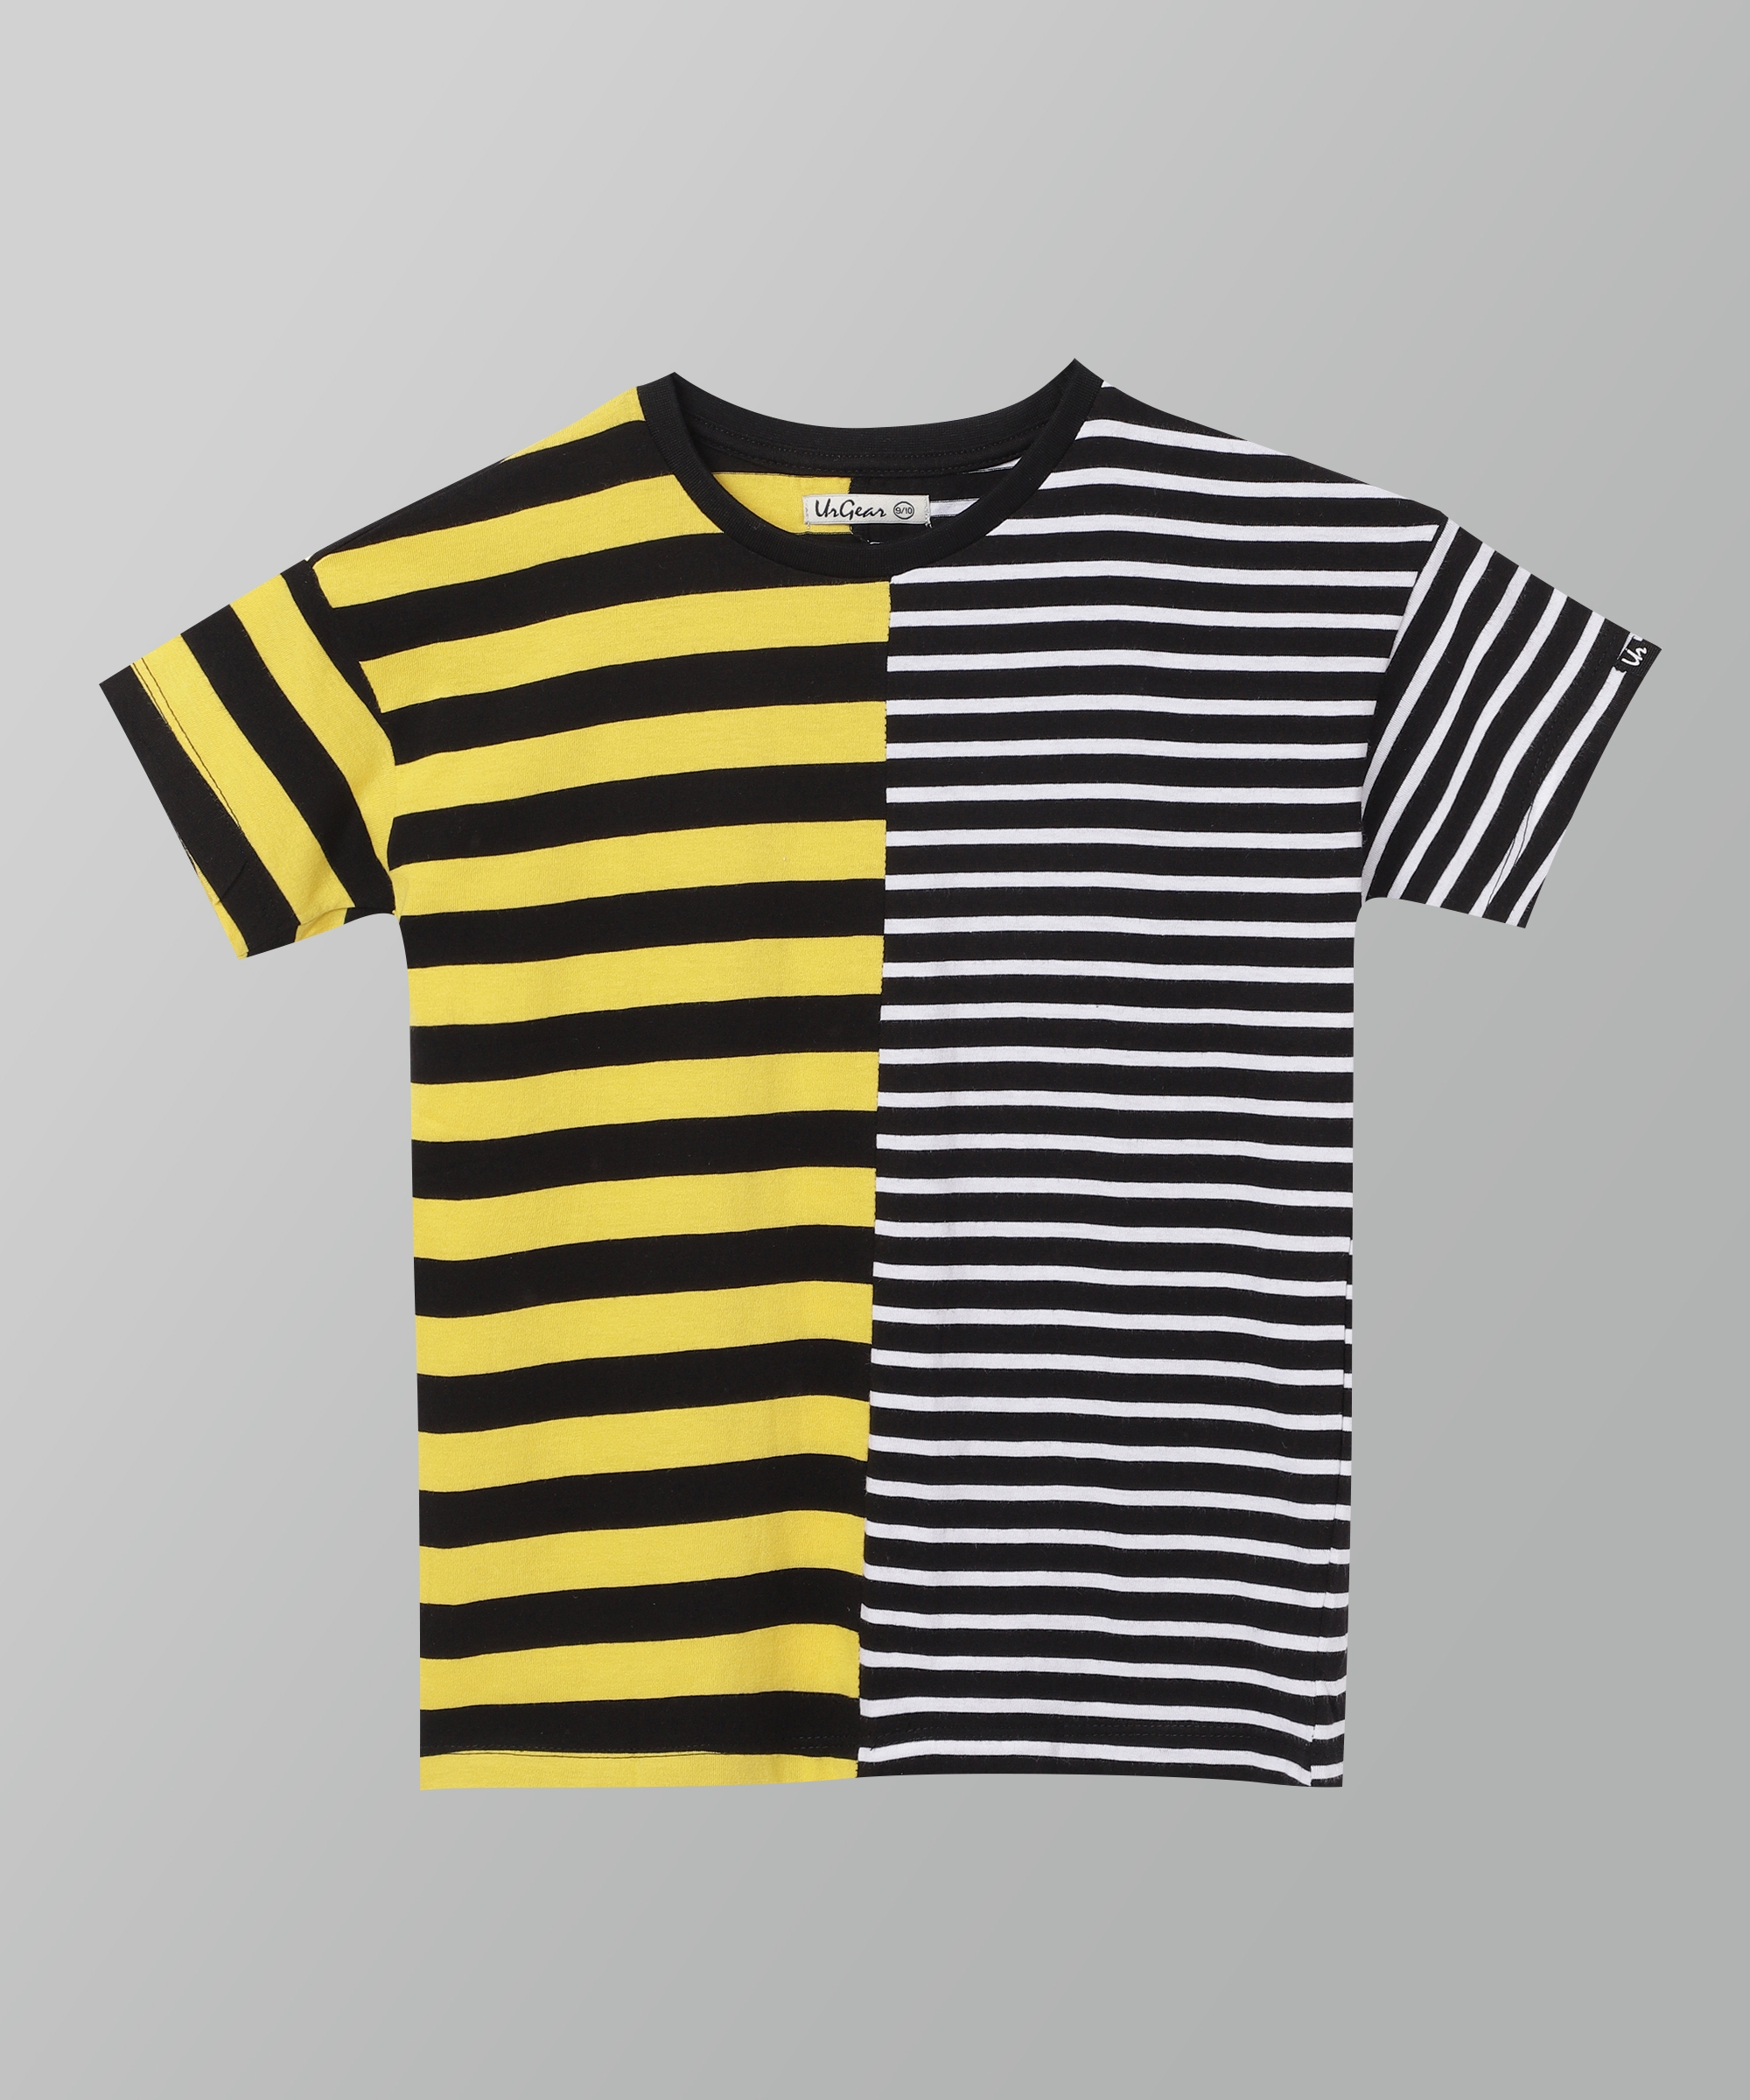 UrGear Kid Girls Yellow and Black Trendy Striped Cotton Top